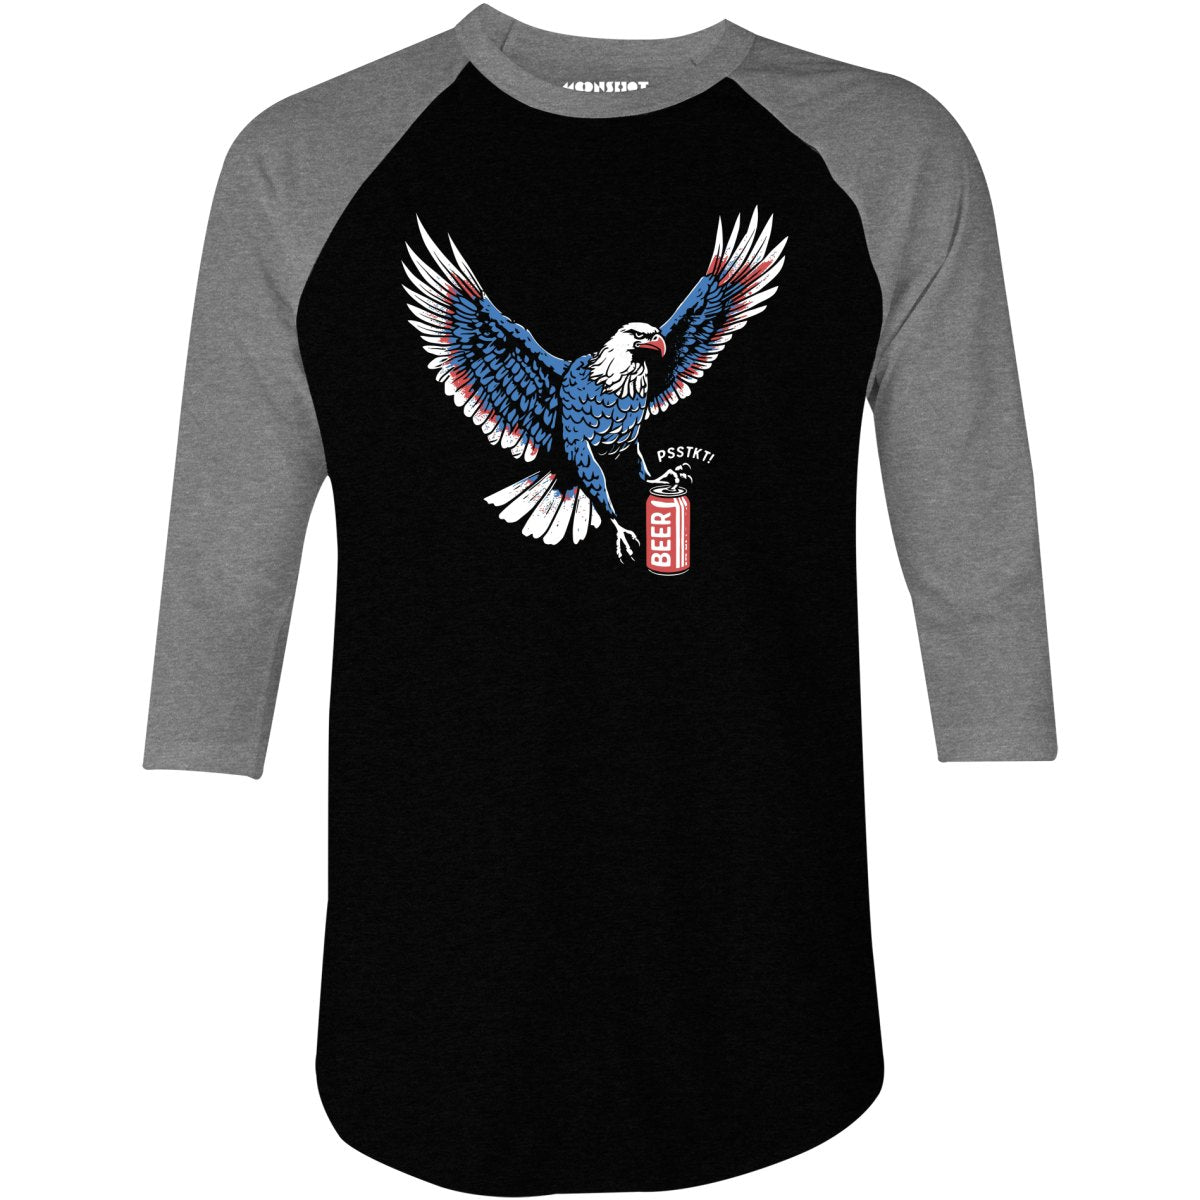 Psstkt Eagle - 3/4 Sleeve Raglan T-Shirt